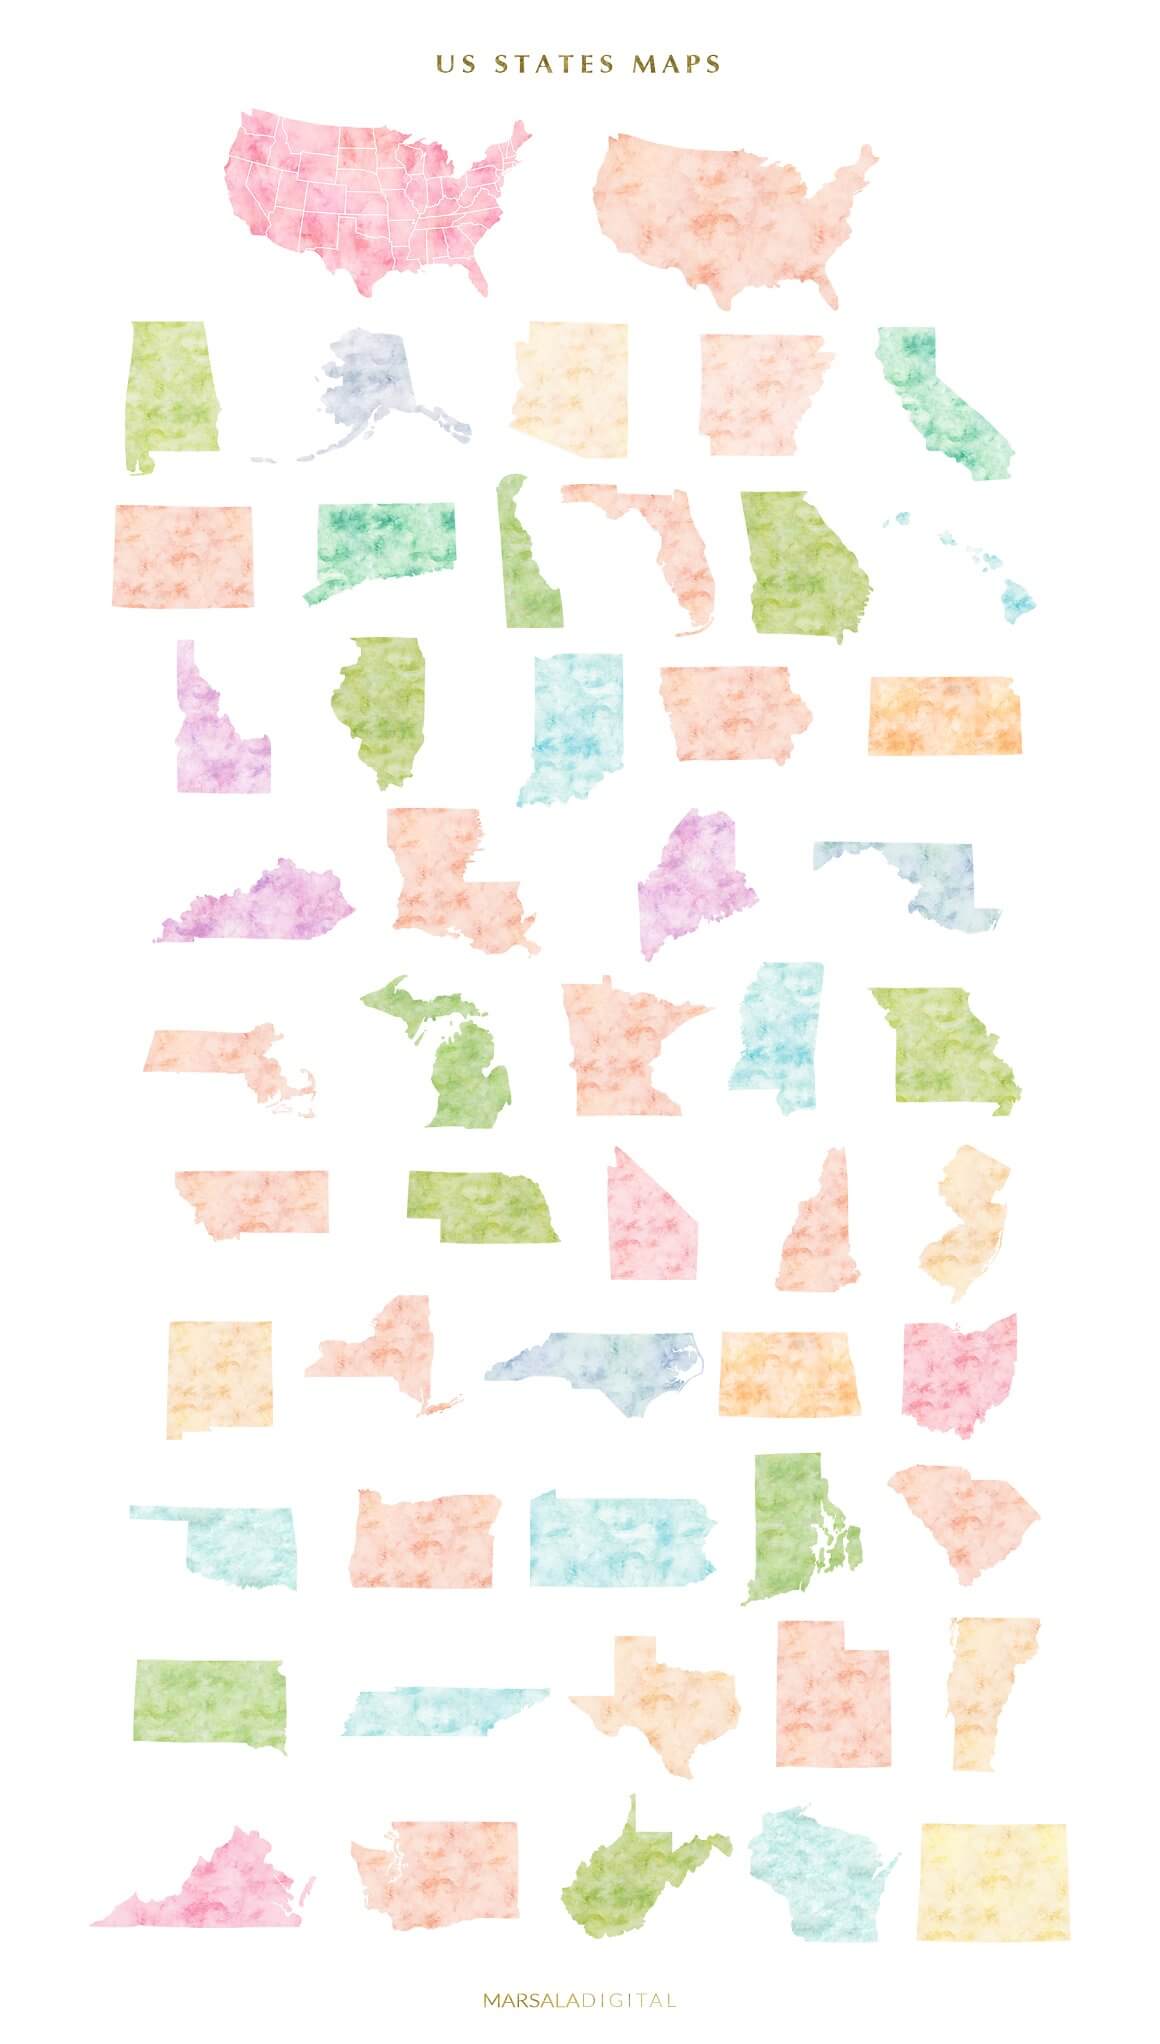 USA States Maps.